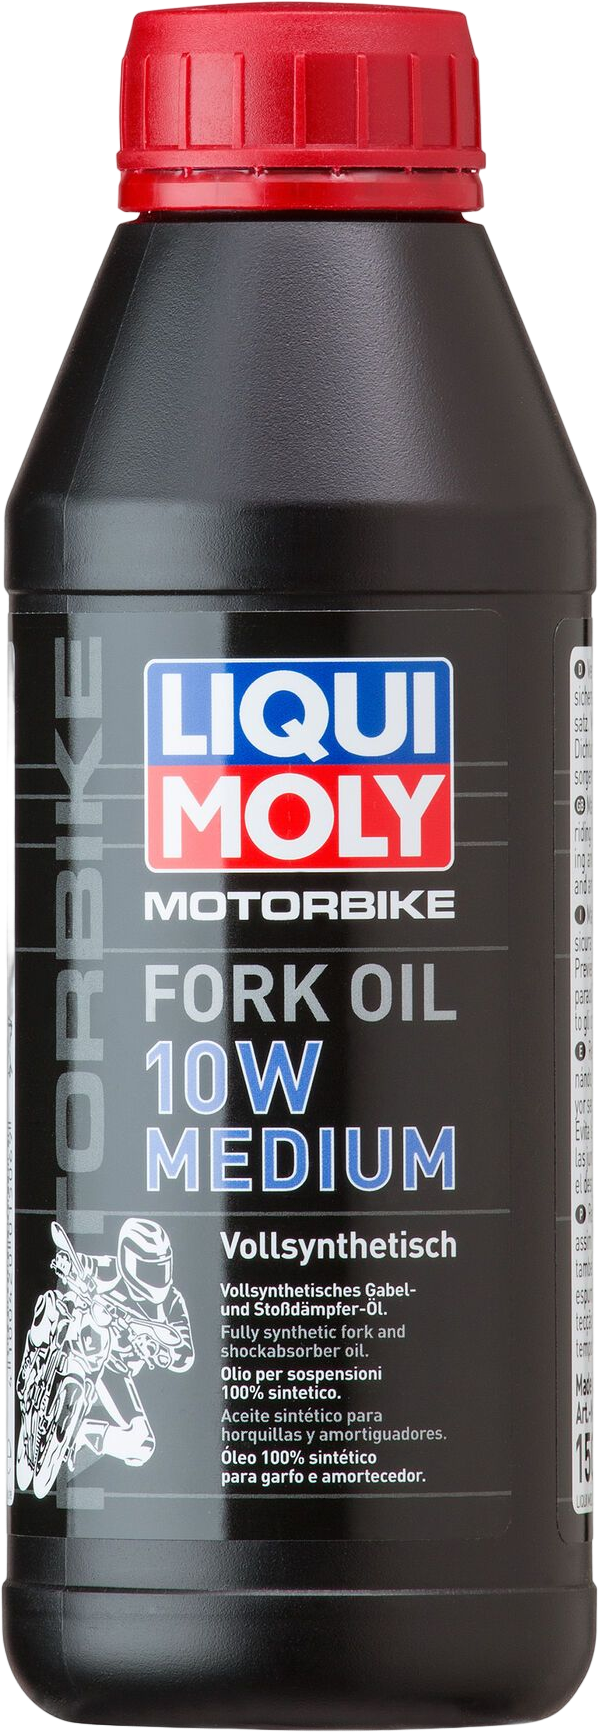 Liqui Moly Motorbike Fork Oil 10W medium, 500 ml